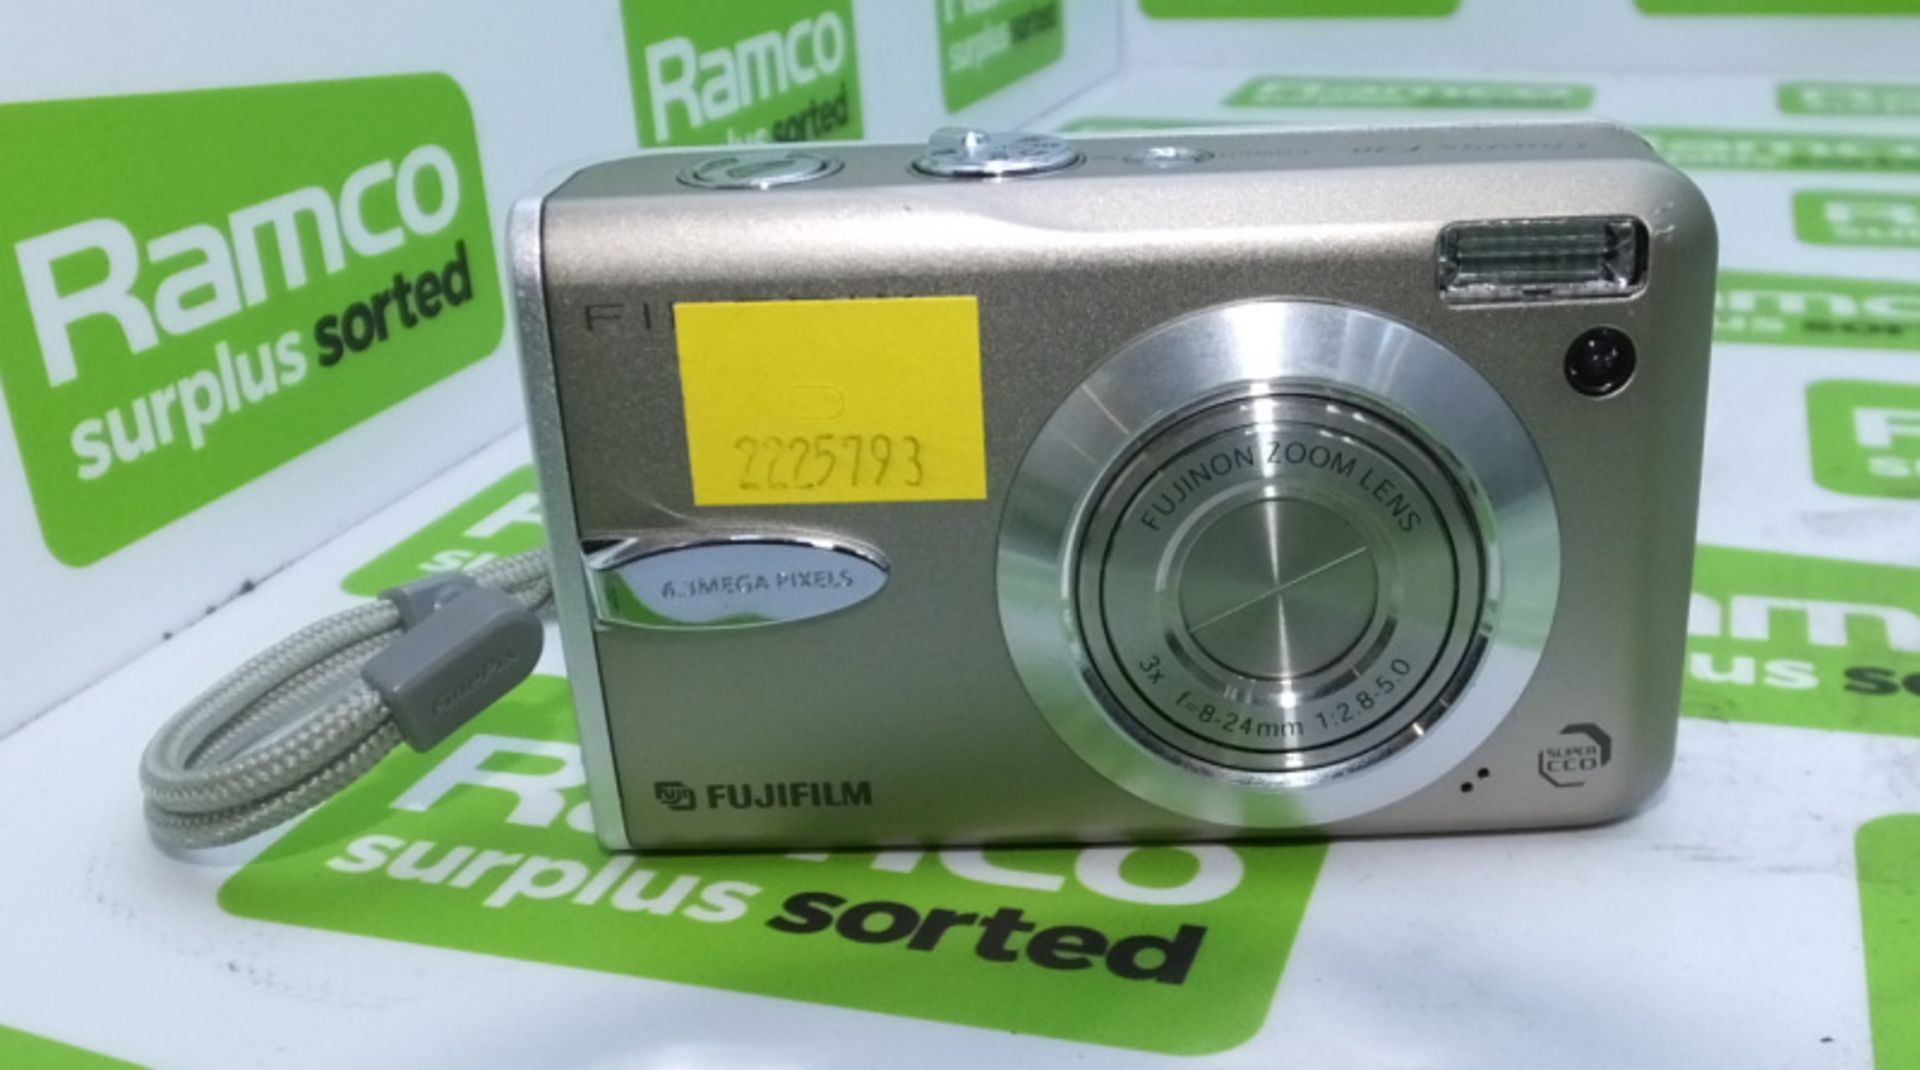 Fujifilm Finepix F30 digital camera - Image 2 of 3